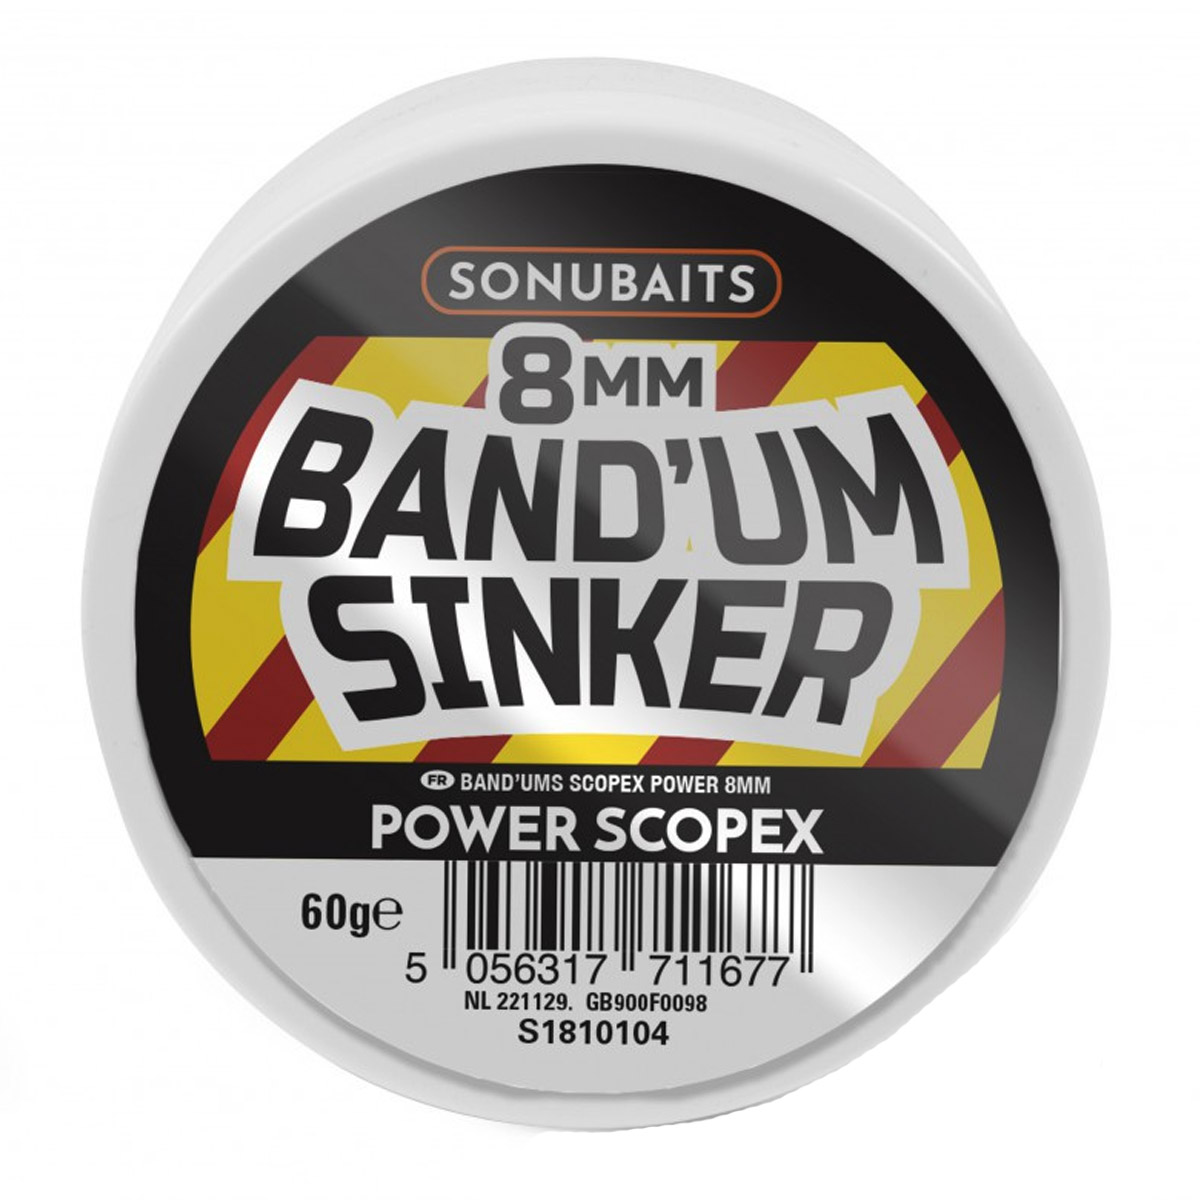 Sonubaits Band'um Sinker Power Scopex -  8 mm